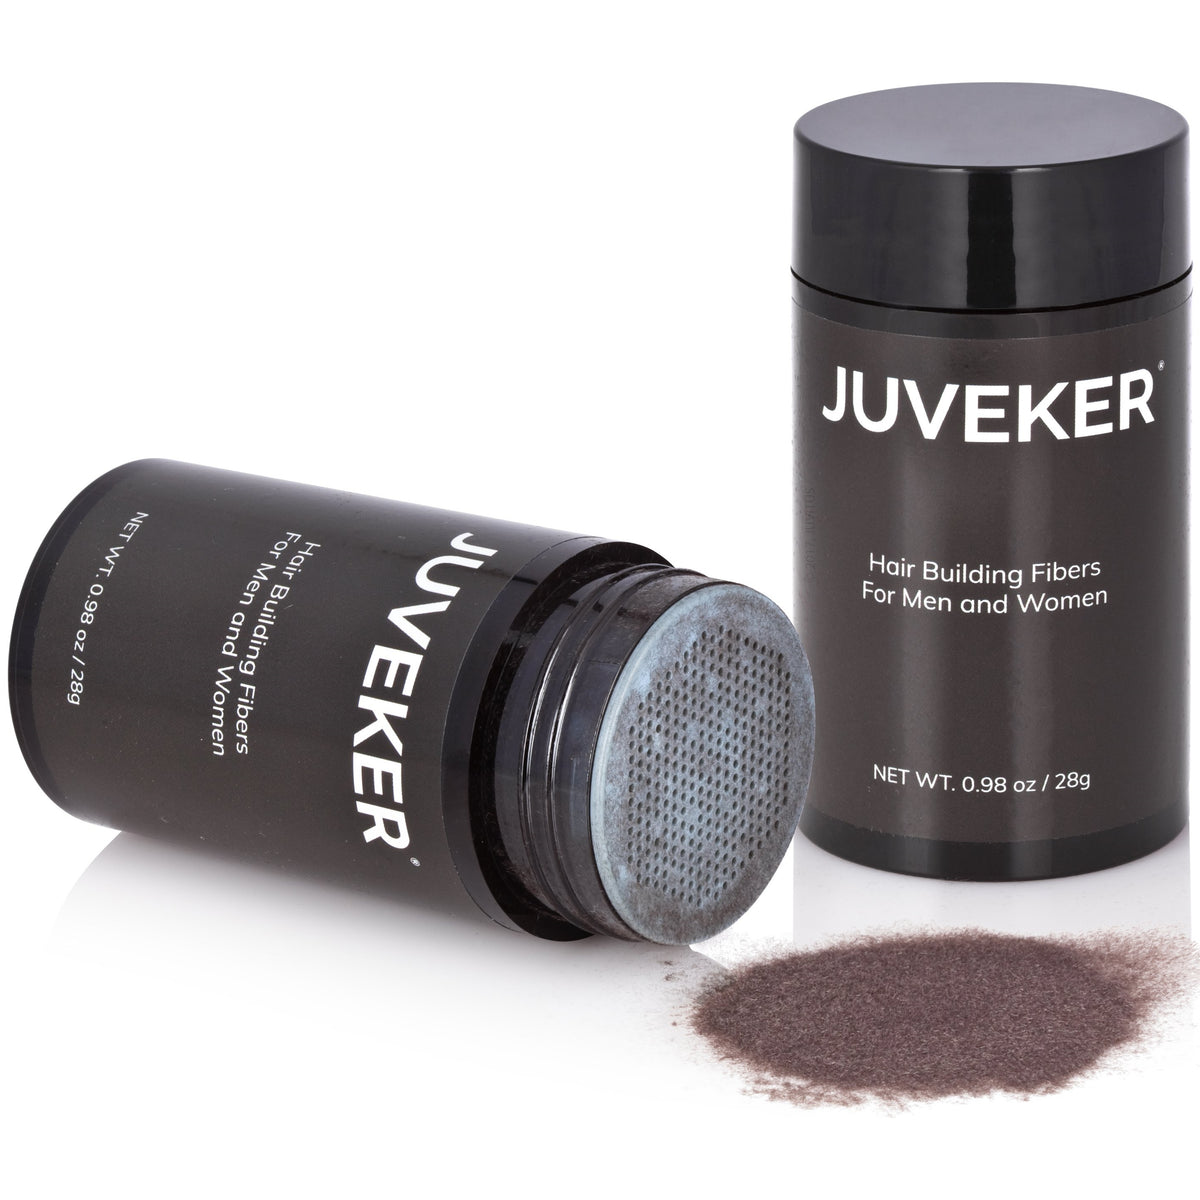 Bottle of JUVEKER Hair Building Fibers